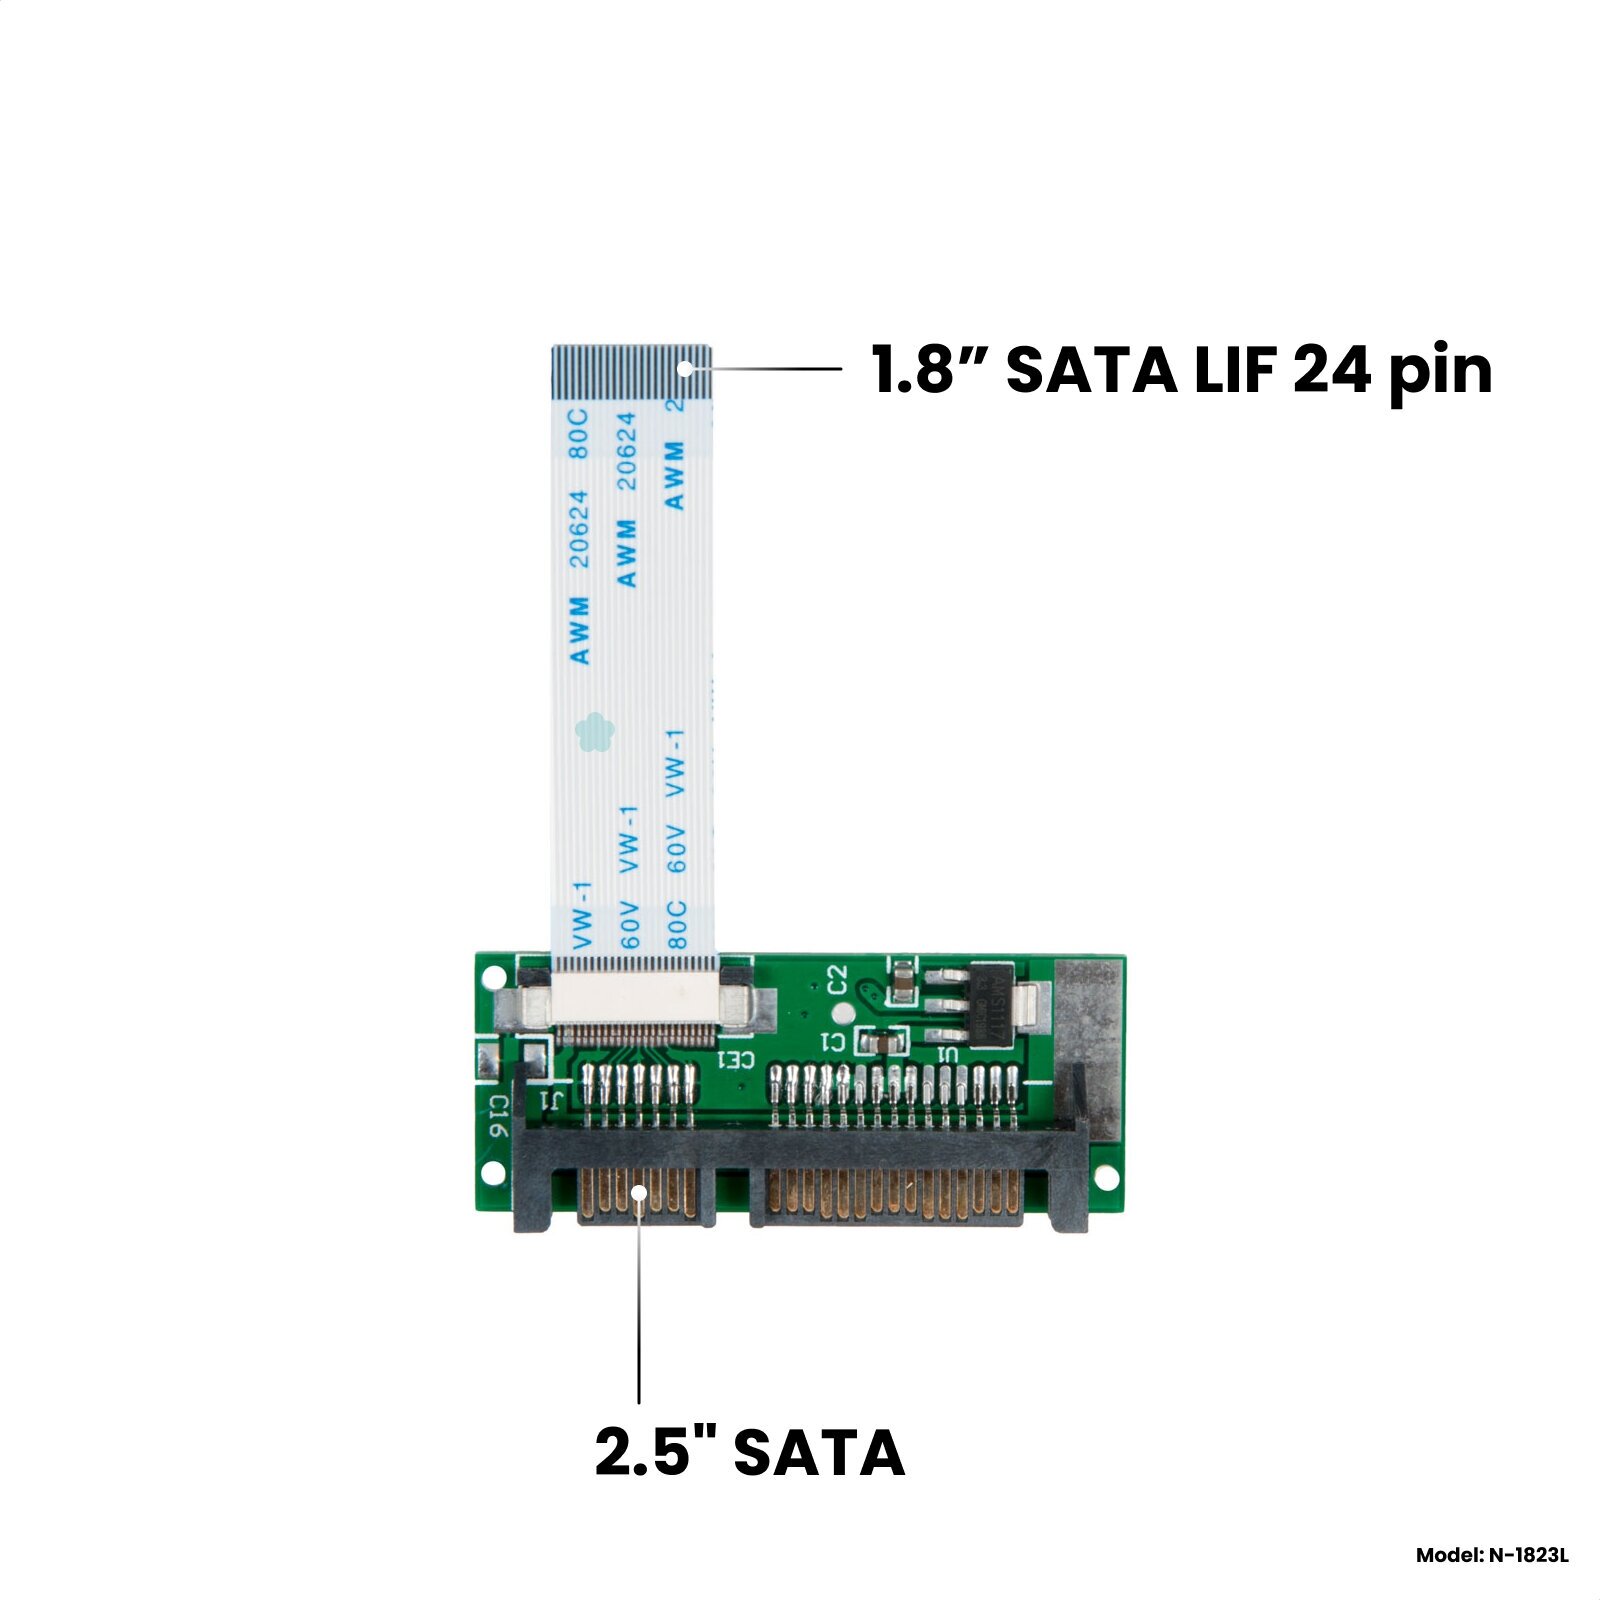 Адаптер-переходник для HDD/SSD 1.8" SATA LIF 24 pin MacBook Air 13" A1304 Late 2008 в разъем 2.5" SATA, NFHK N-1823L